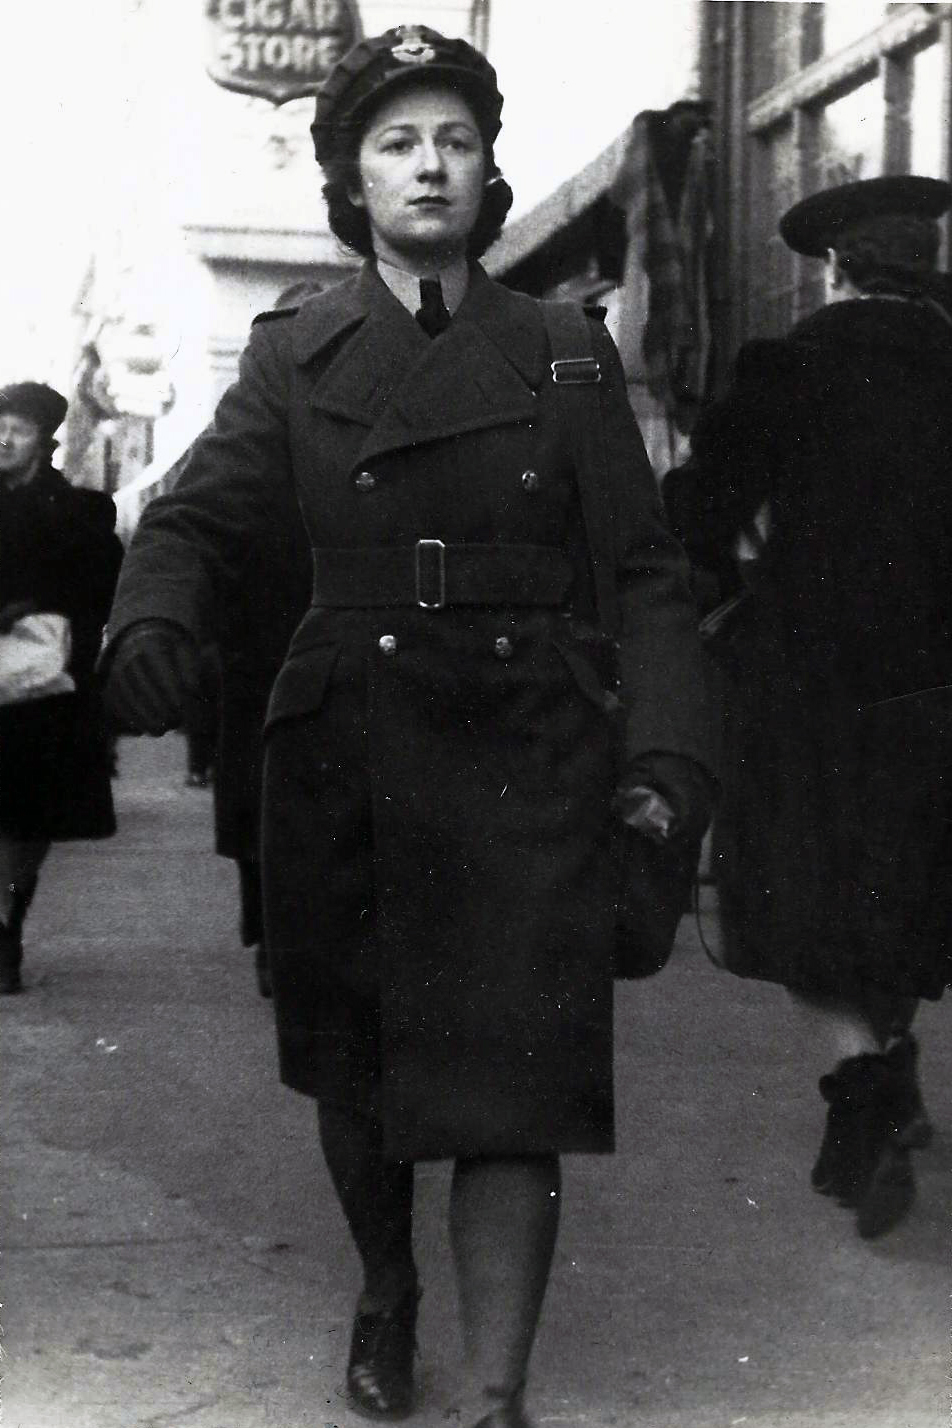 Woman in military uniform walking on busy sidewalk.